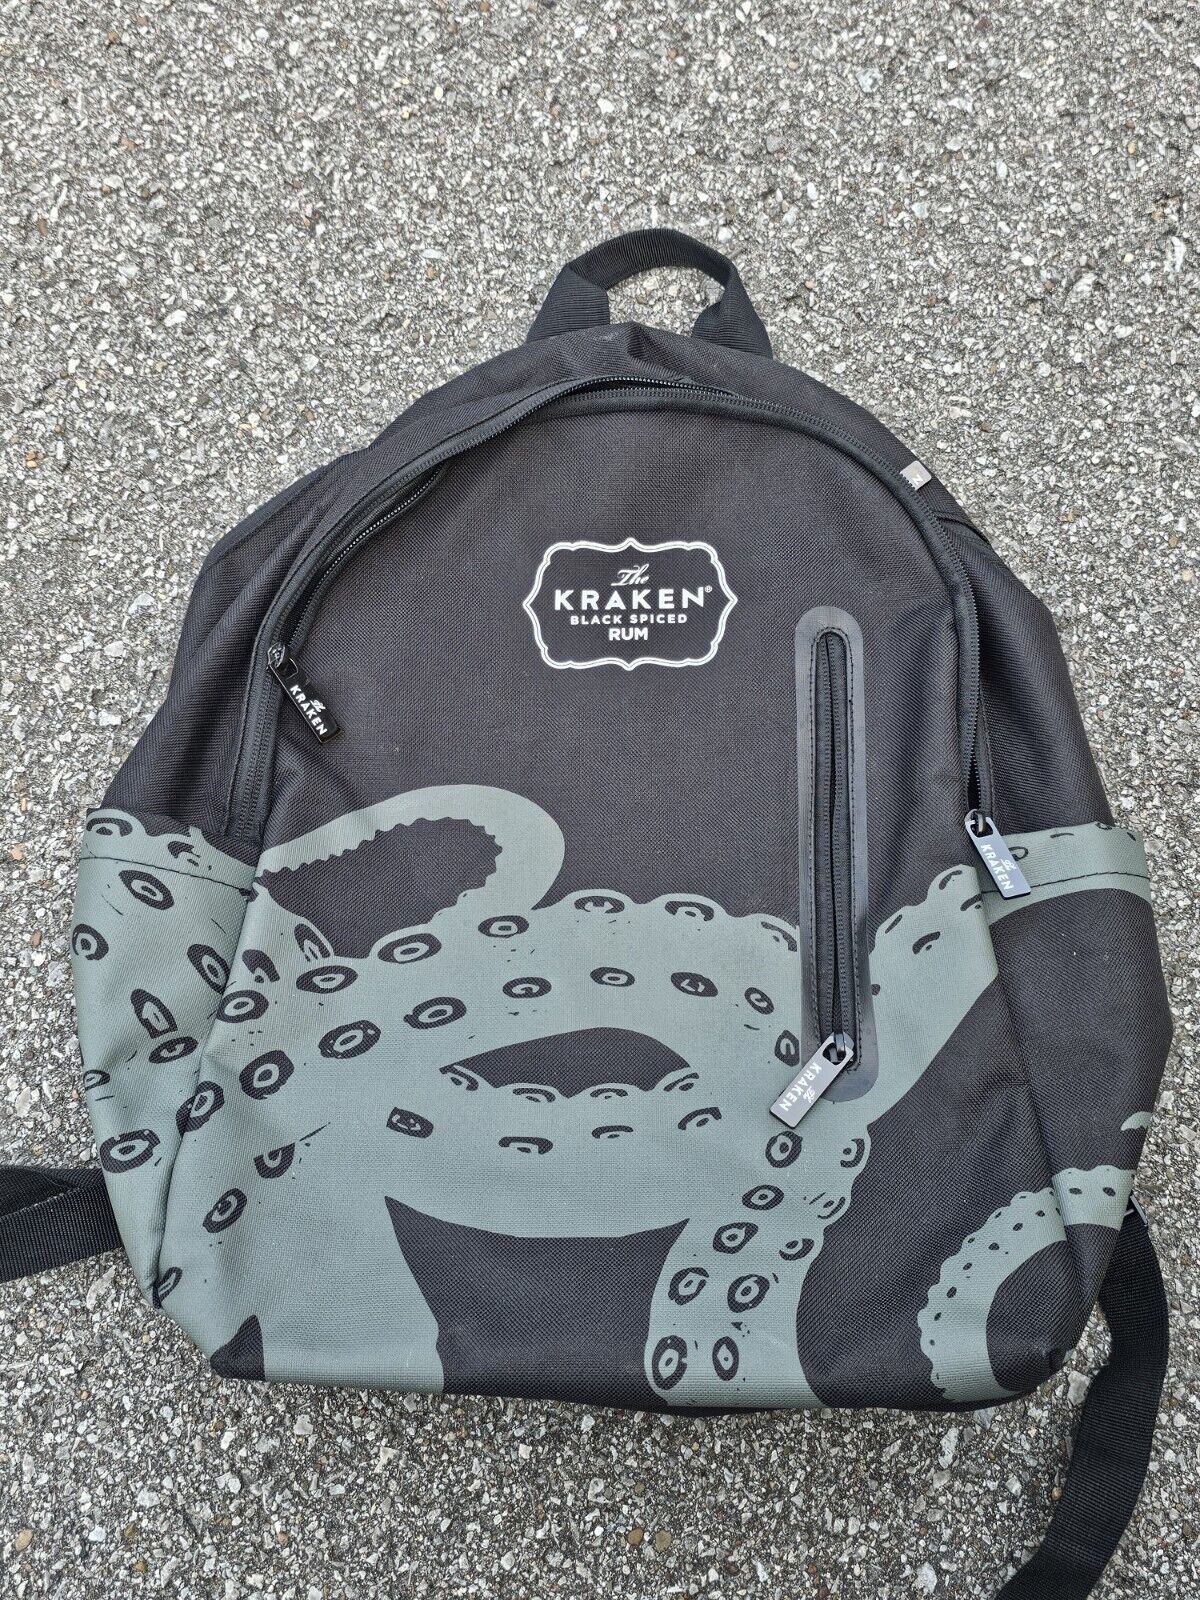 Rare The Kraken Black Spiced RUM Backpack Black And Grey memorabilia merchandise